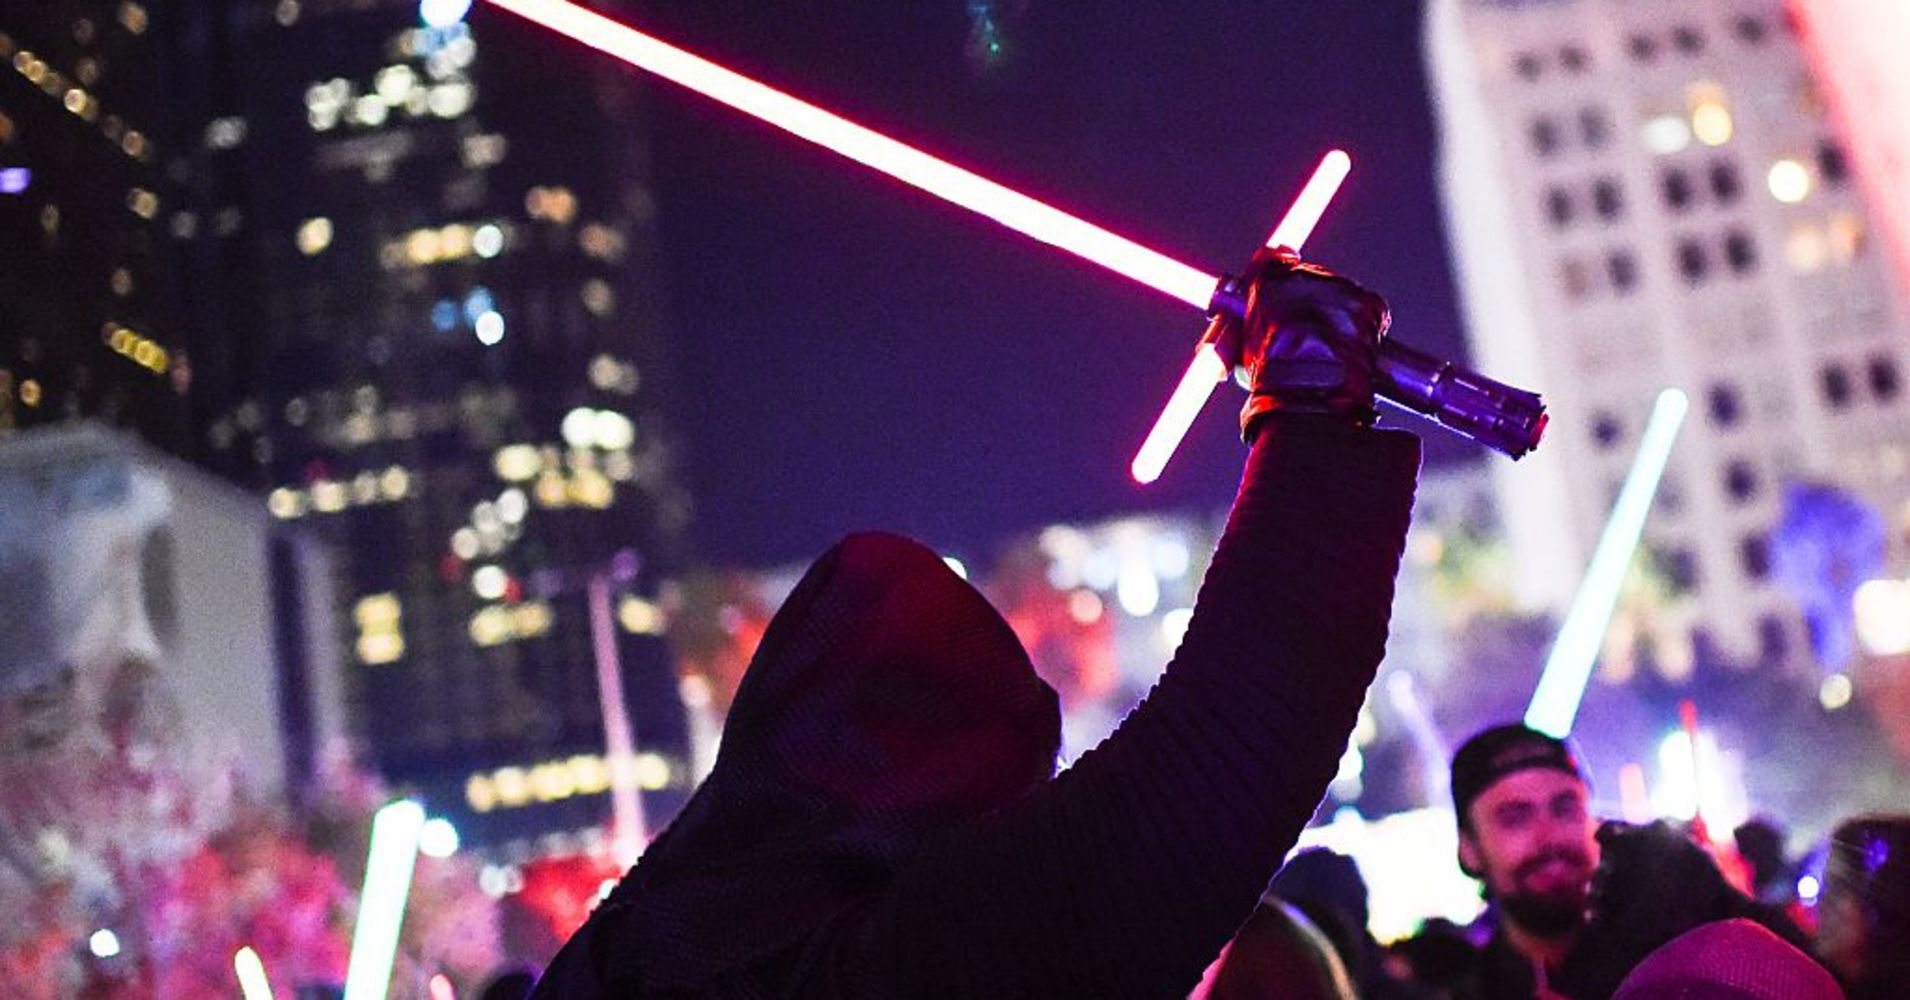 A Star Wars fan dressed as Kylo Ren raises his lightsaber